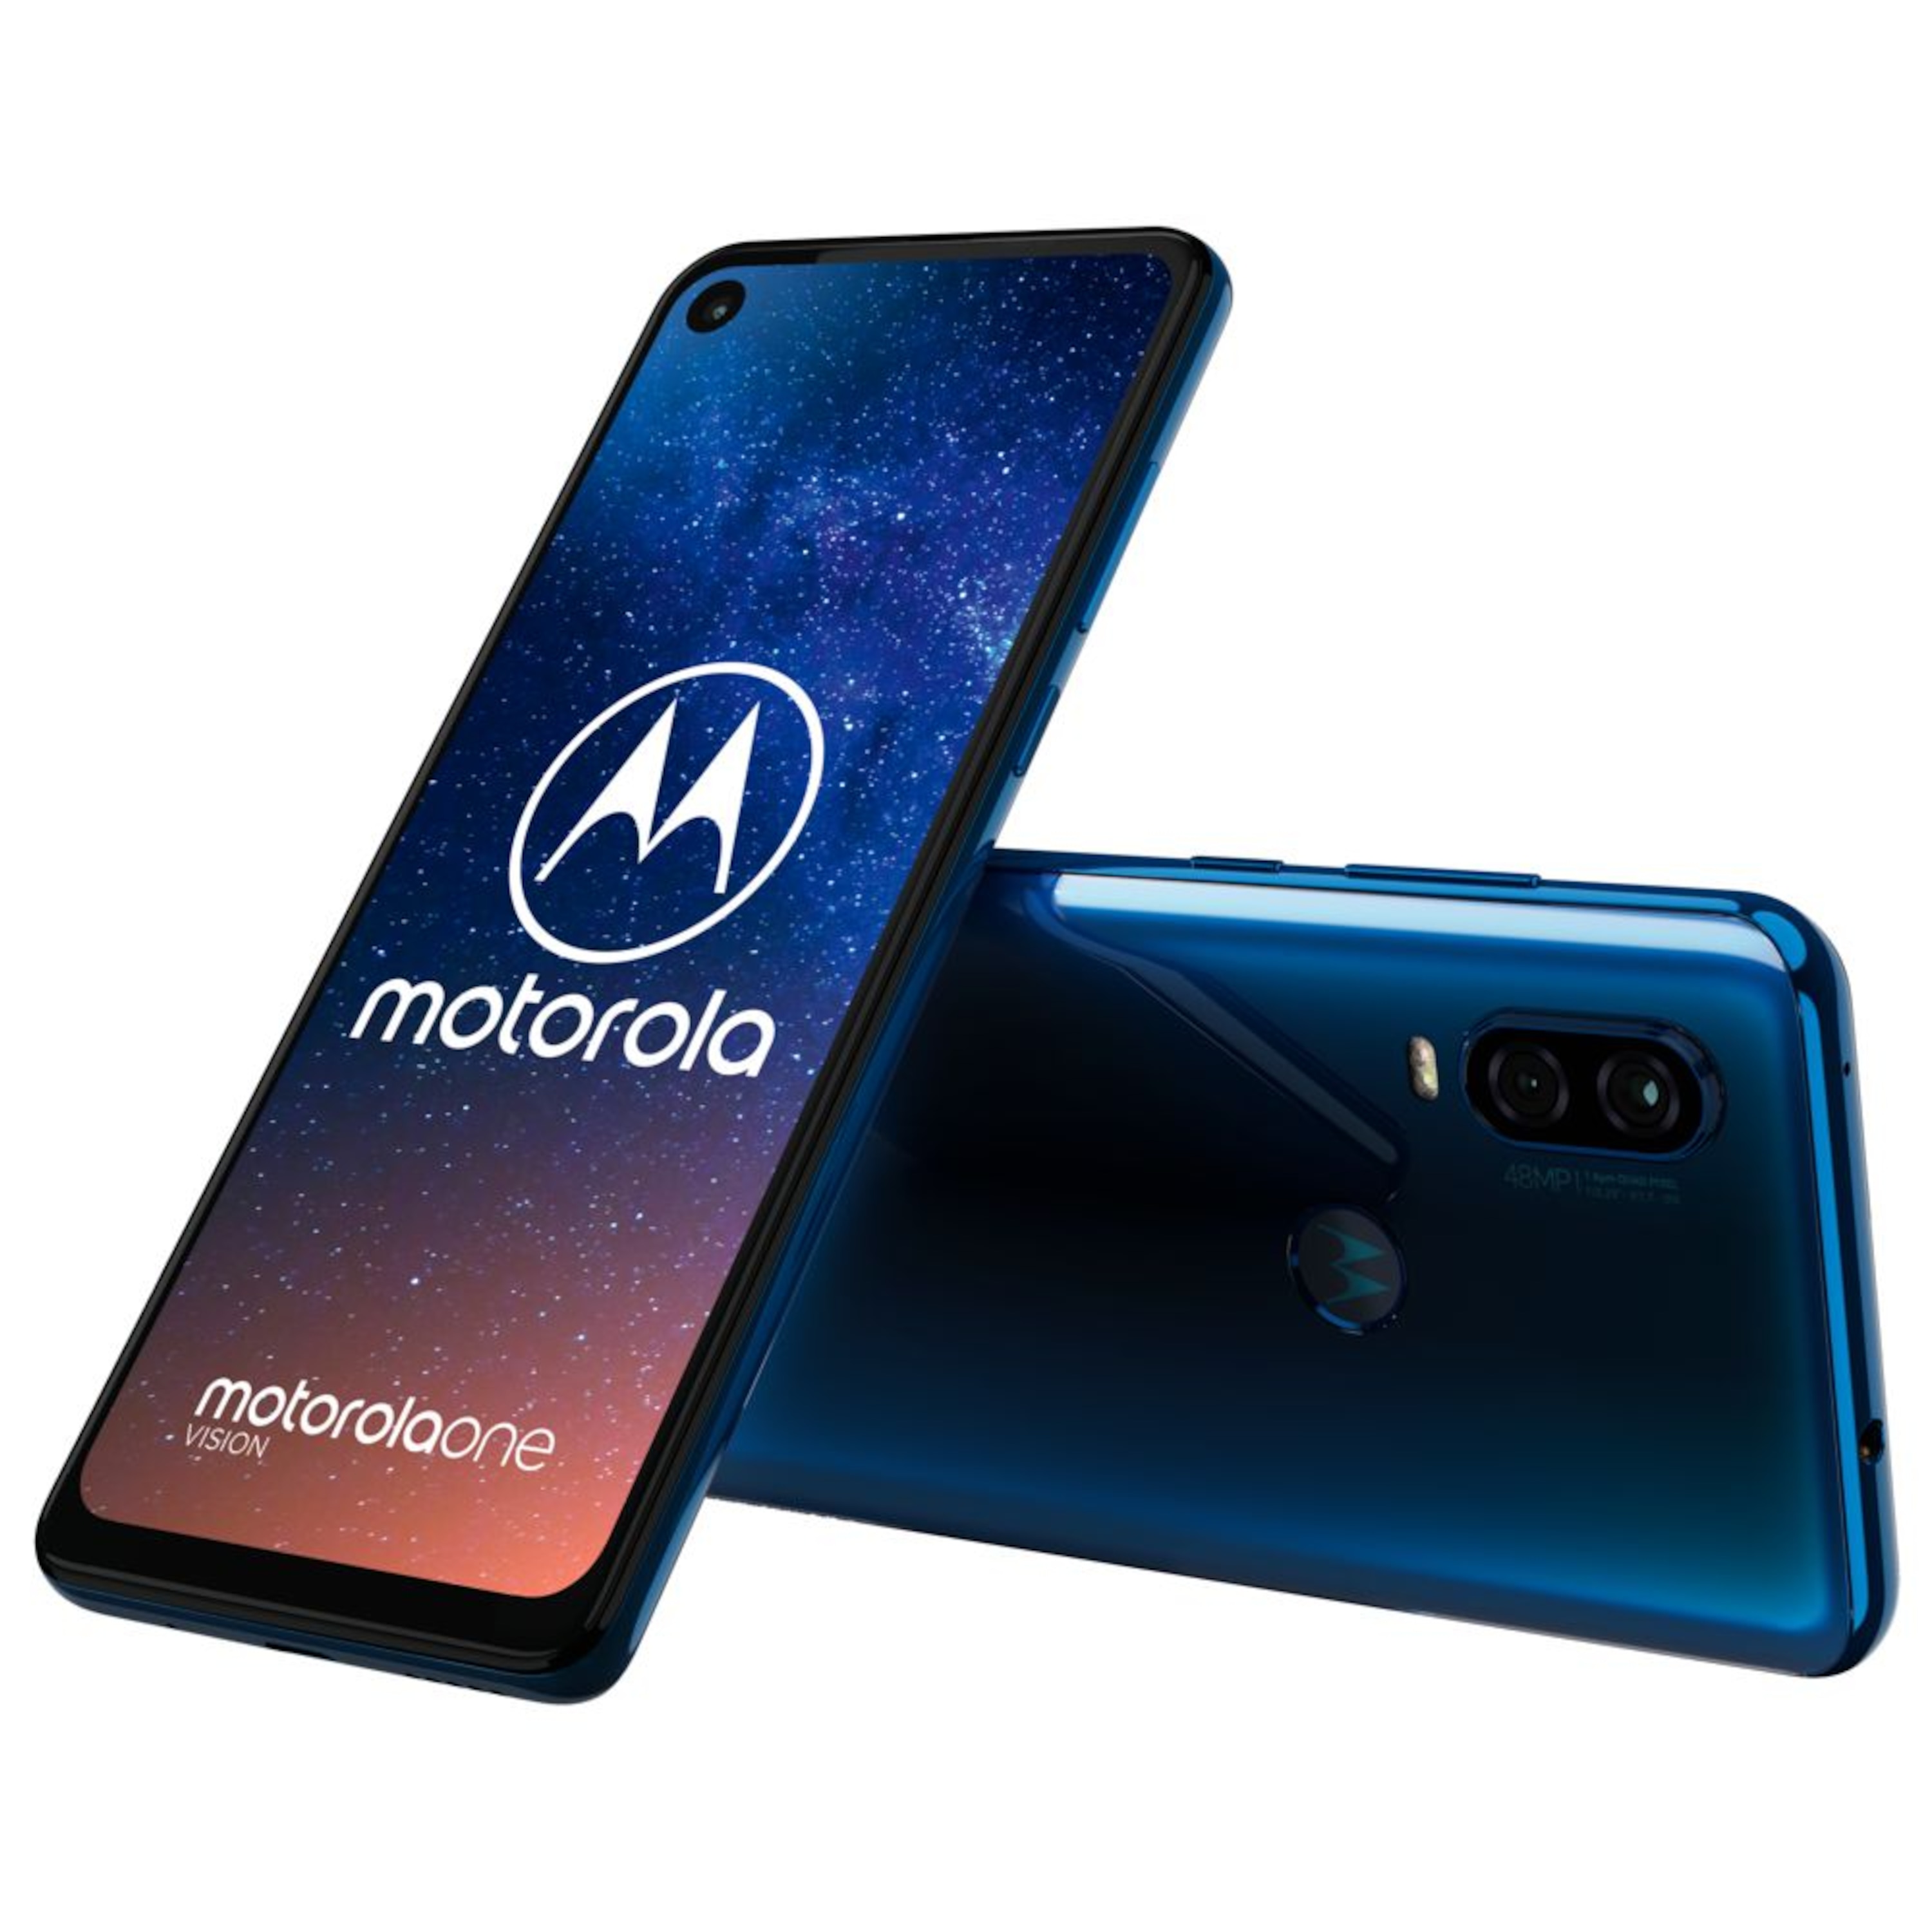 MOTOROLA One Vision Smartphone, 16 cm (6,3") Full HD+ Display, Android™ 9, 128 GB Speicher, Octa-Core-Prozessor, Dual-SIM, LTE